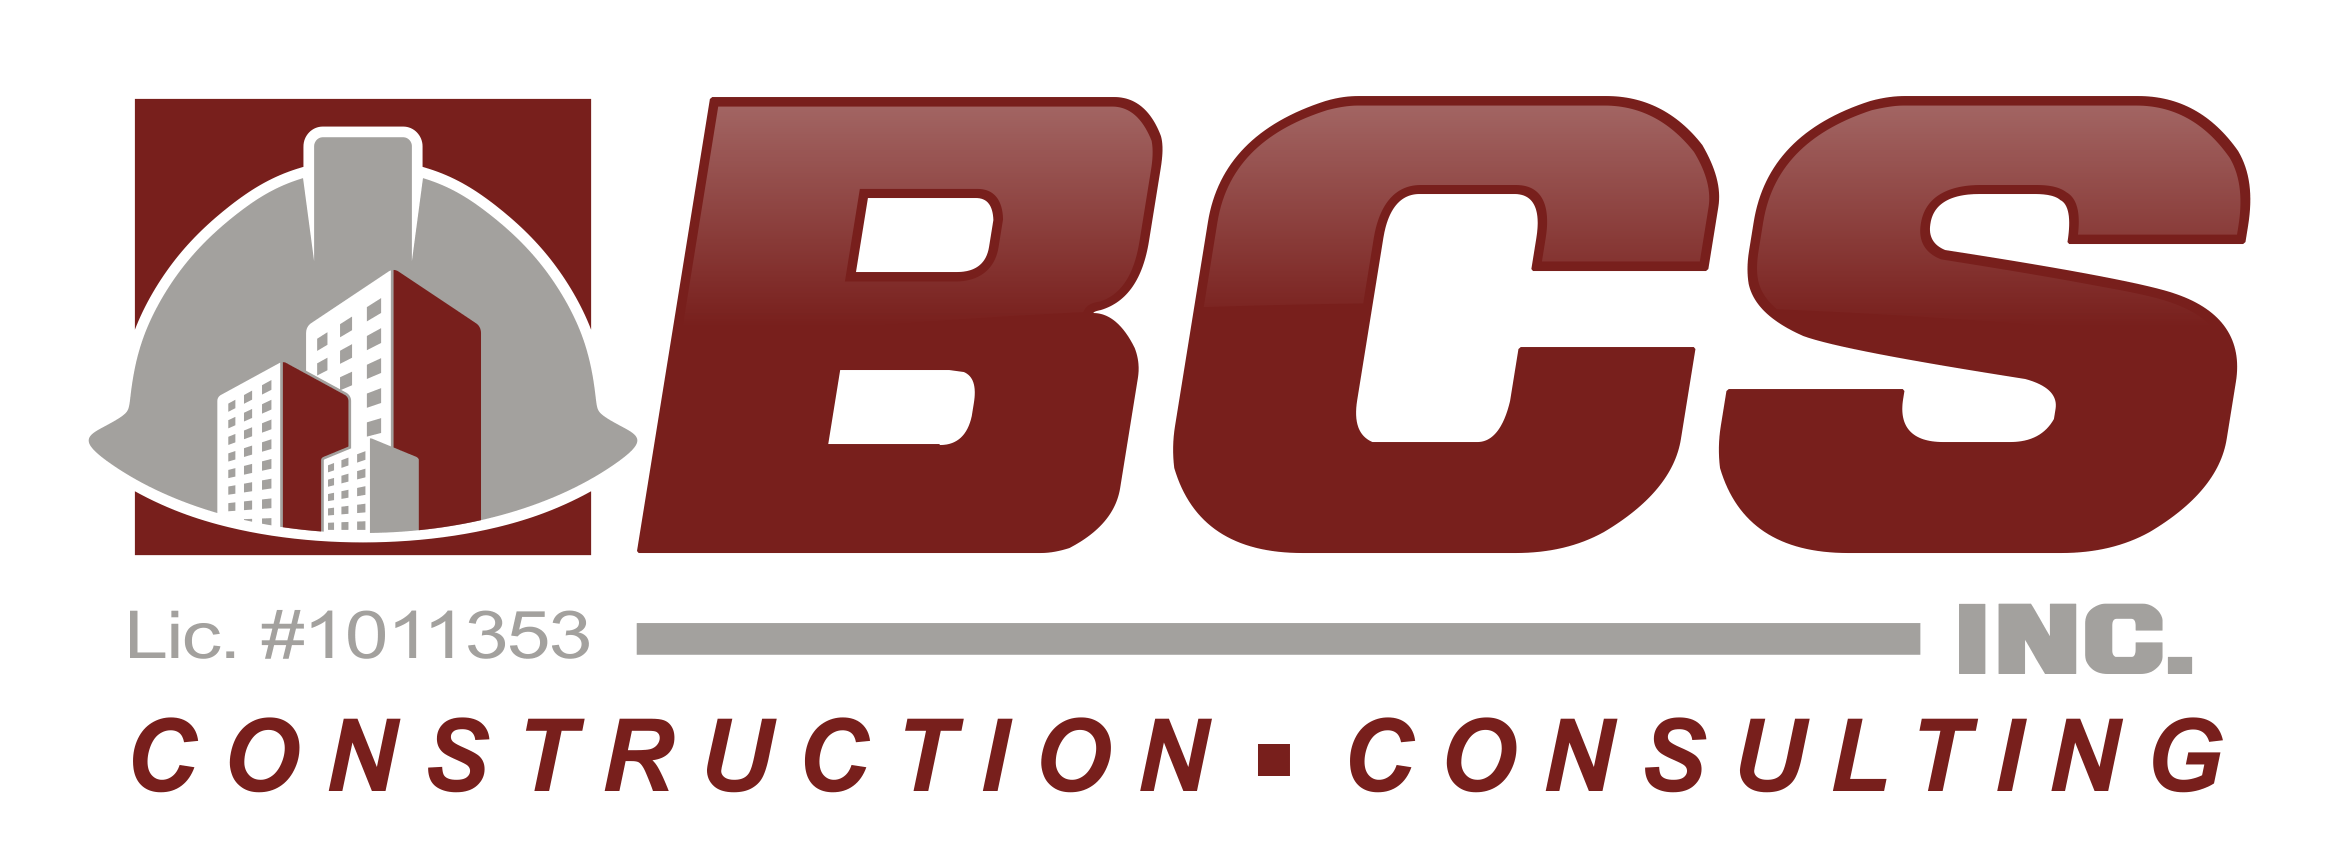 Blackstone Construction Services, Inc. Logo